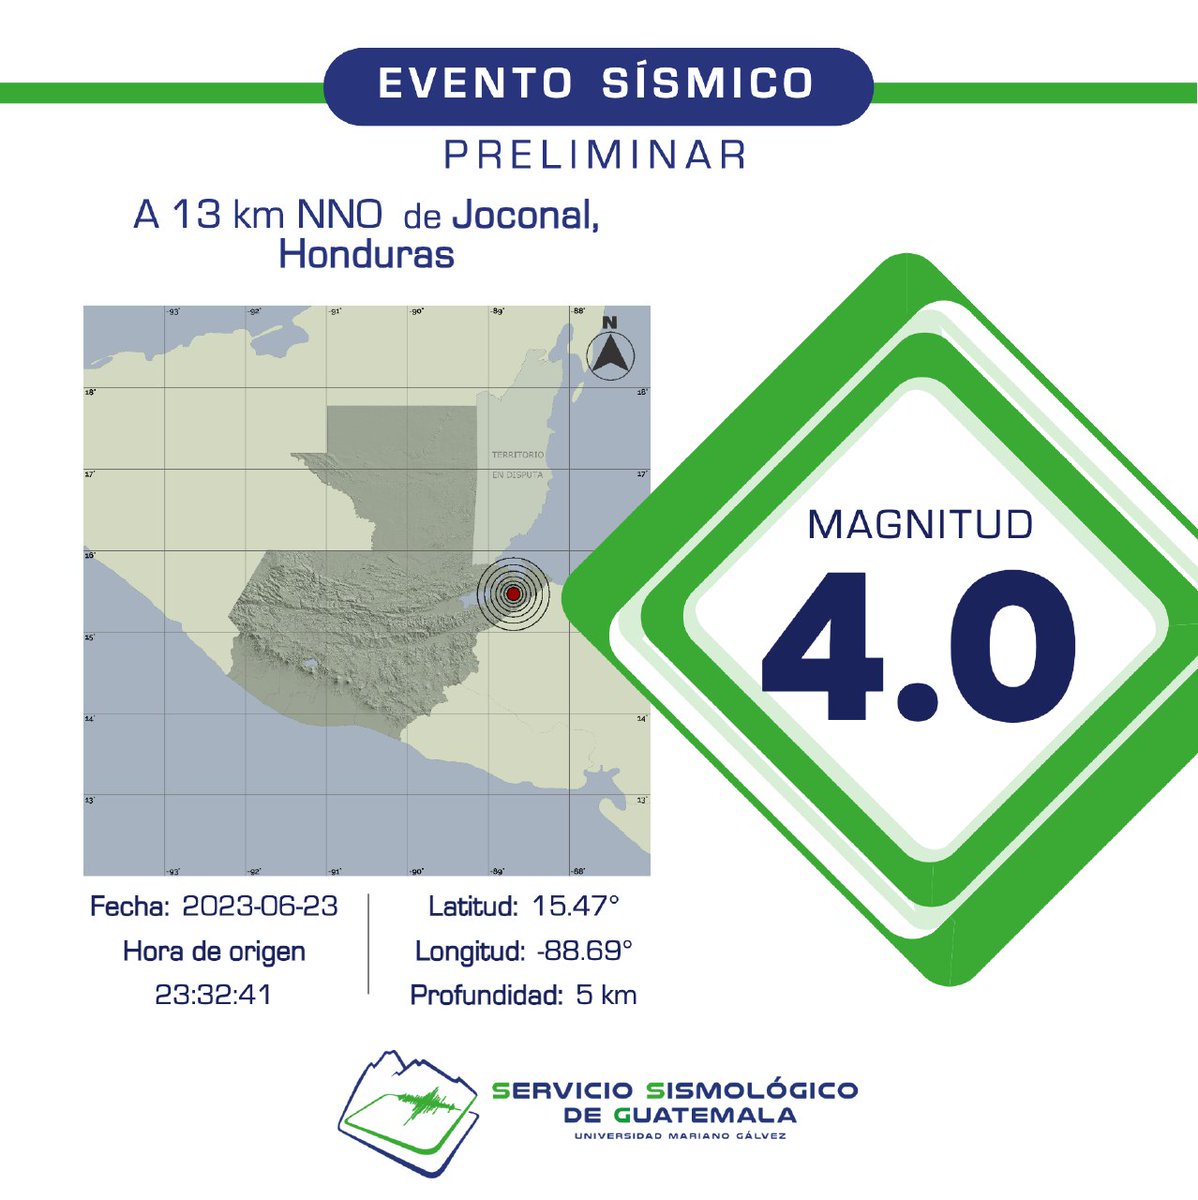 PRELIMINAR
Sismo registrado a 13 km NNO de Joconal, Honduras. #Temblor #TemblorGT #Sismo #SismoGT